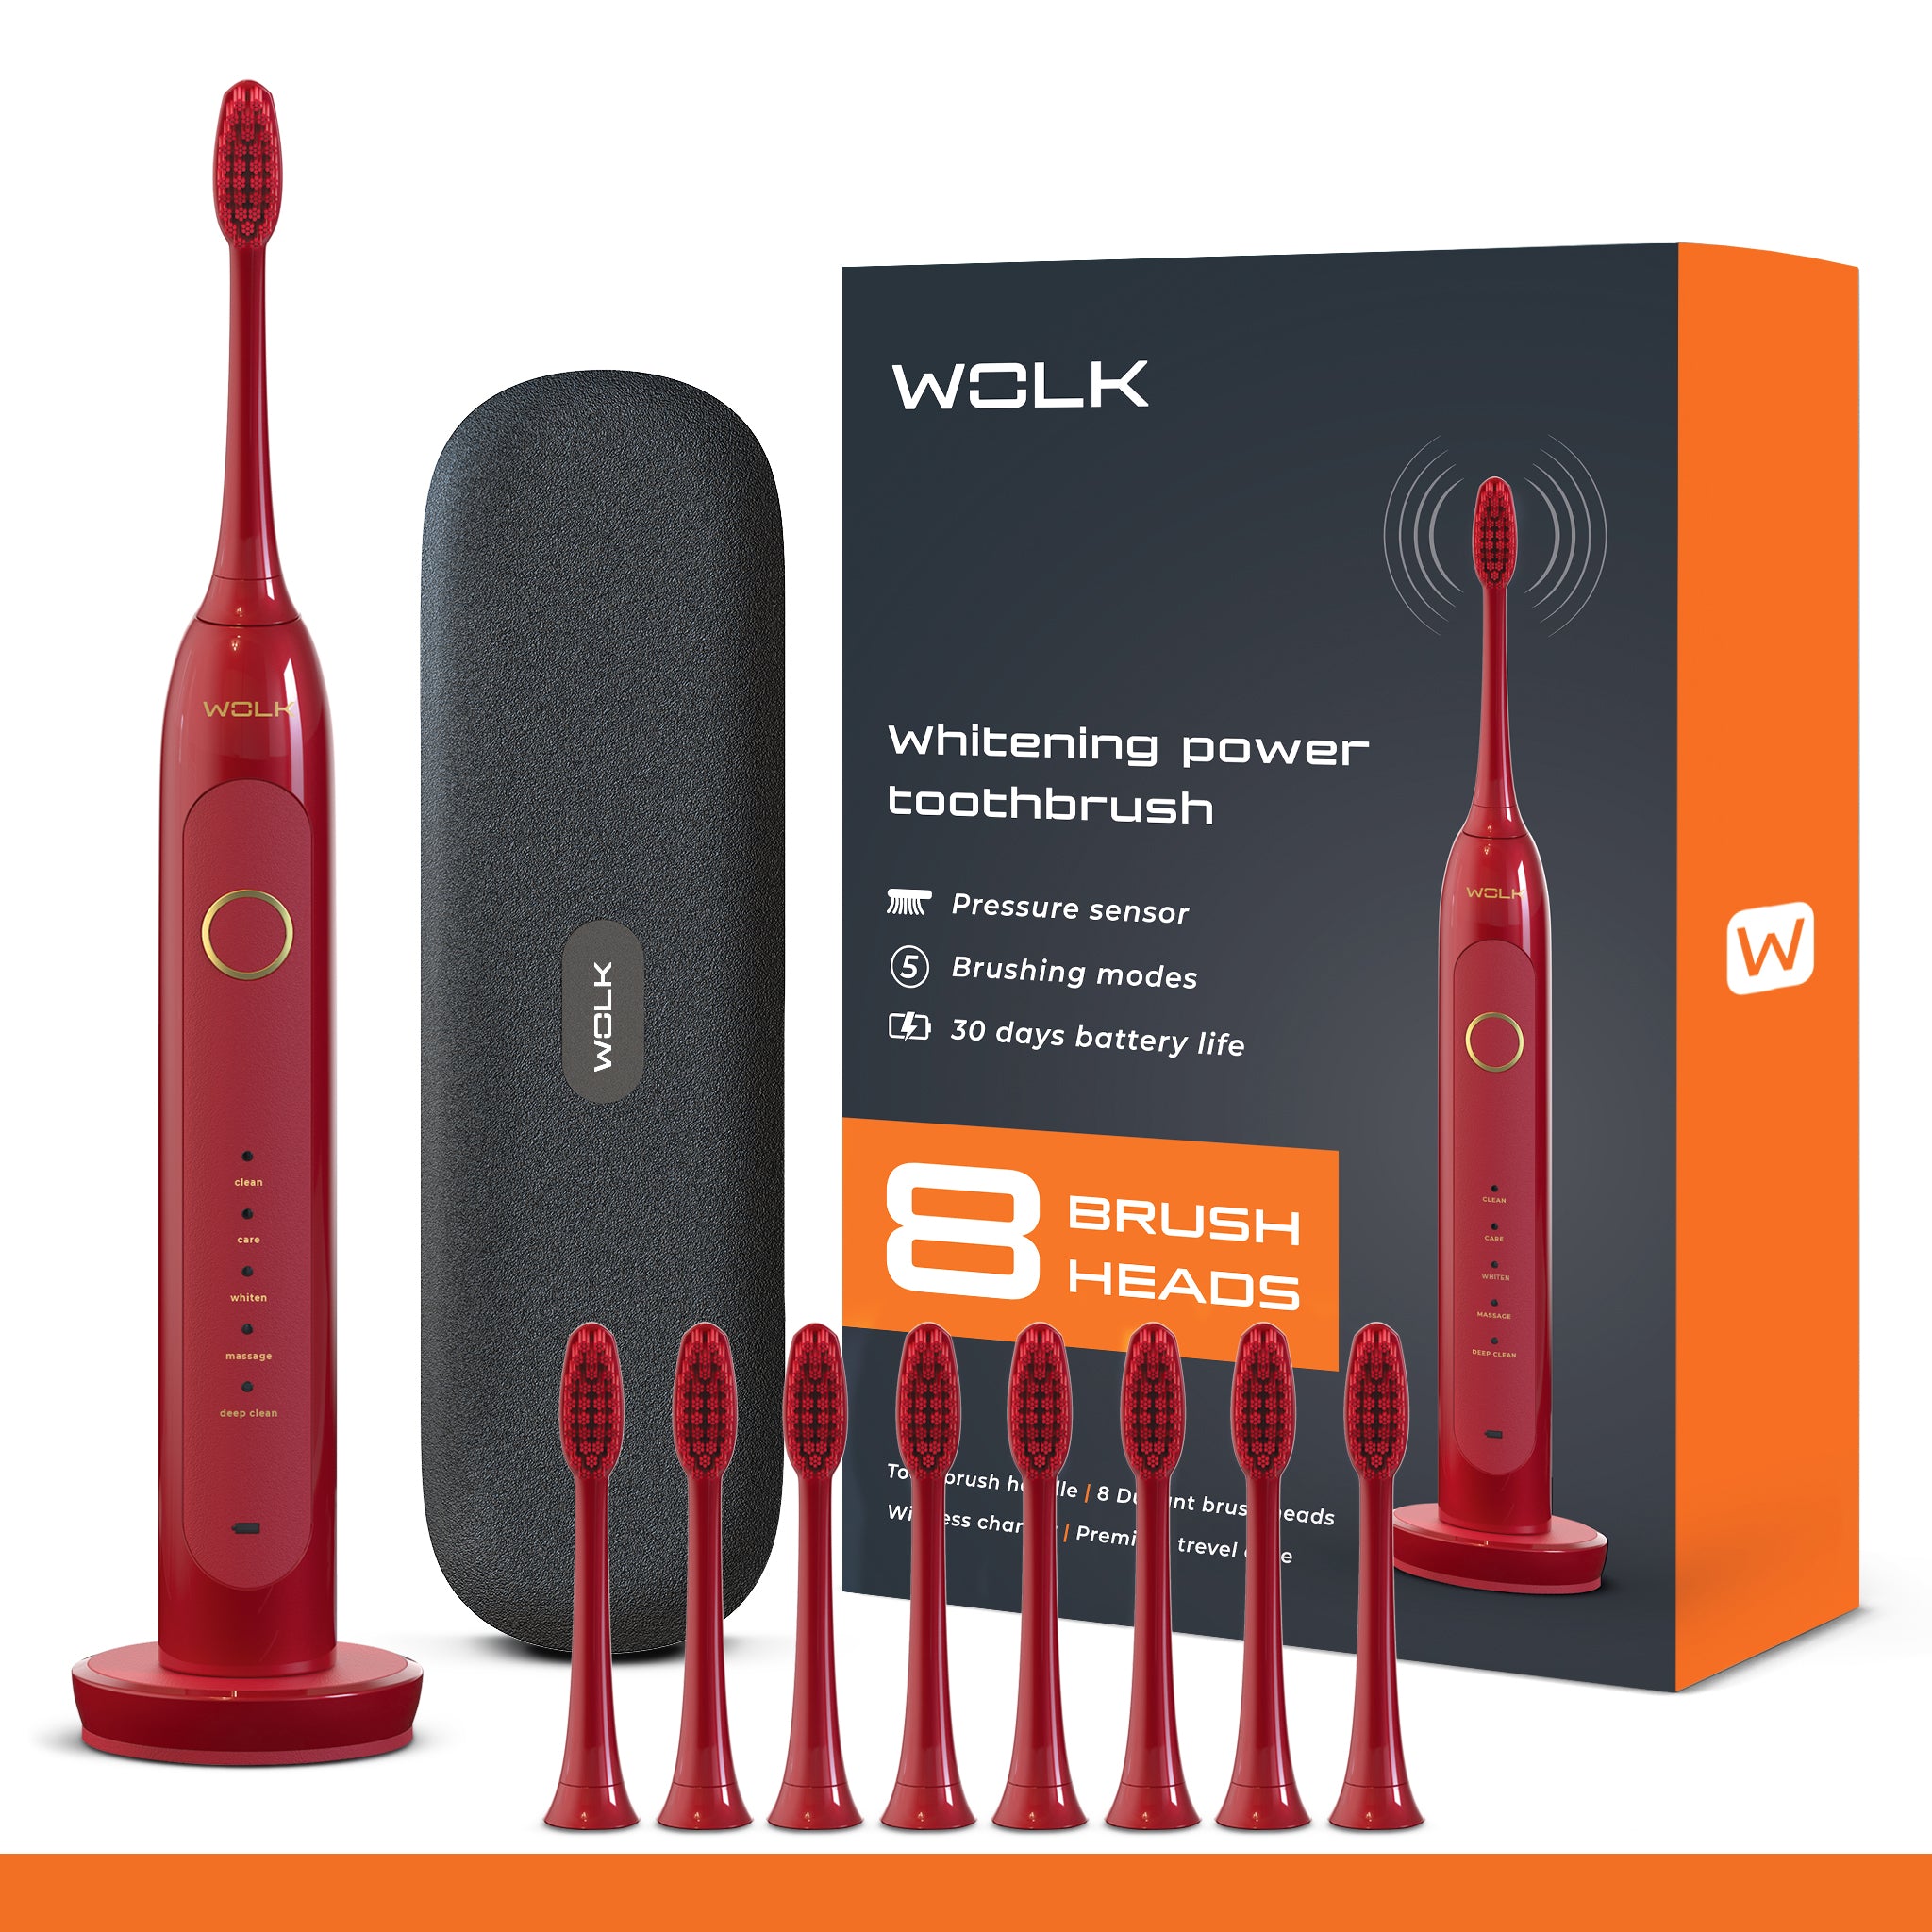 Wolk T6421 Ultra Whitening Toothbrush with Pressure Sensor & 5 Brushing Modes, 8 Dupont Brush Heads, Premium Travel Case, Rechargeable. (maroon)